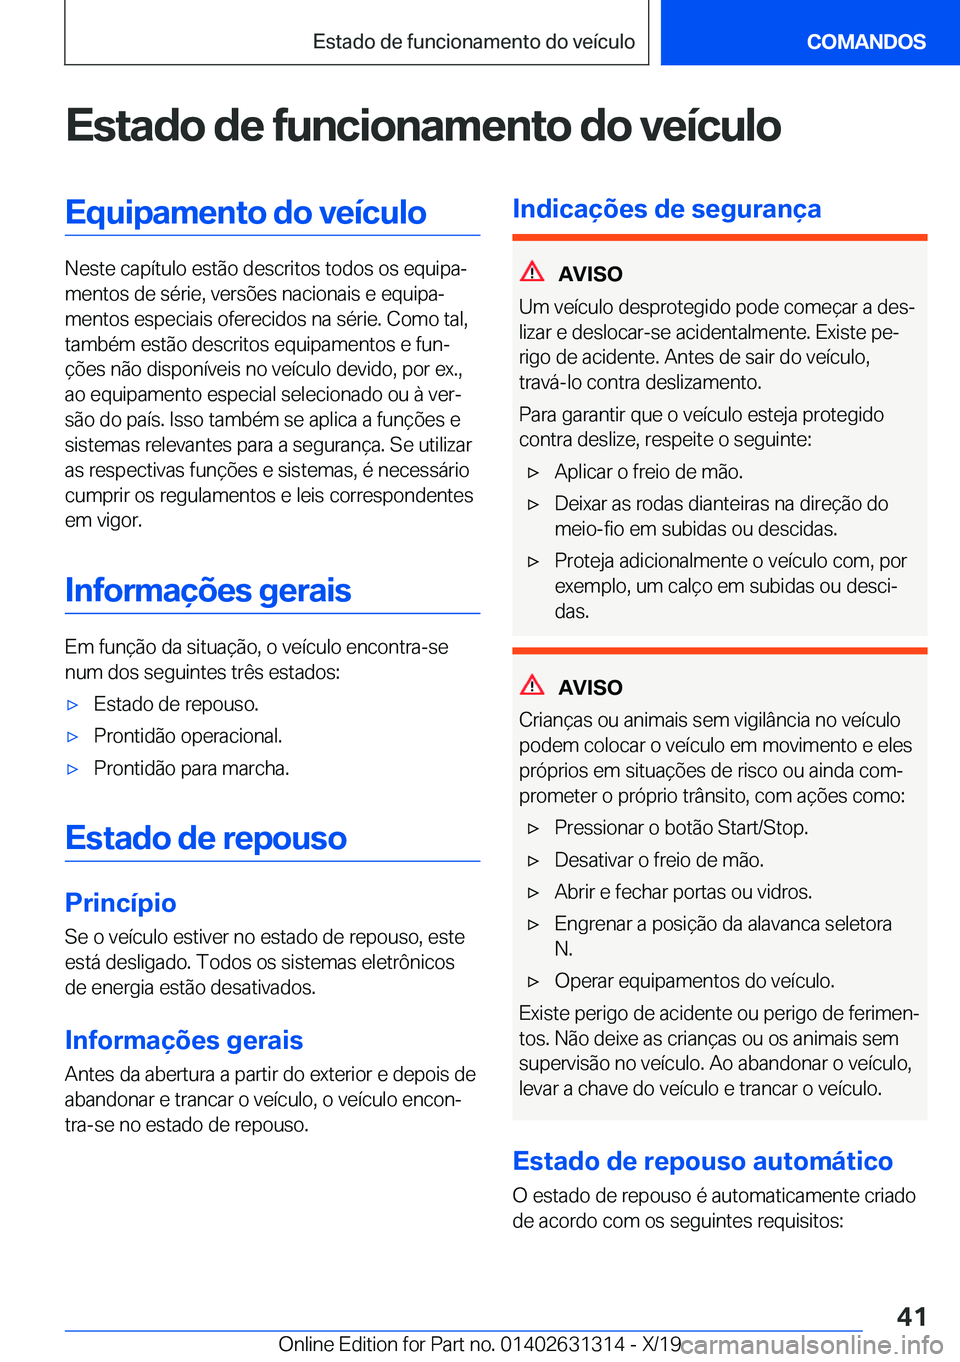 BMW M8 2020  Manual do condutor (in Portuguese) �E�s�t�a�d�o��d�e��f�u�n�c�i�o�n�a�m�e�n�t�o��d�o��v�e�